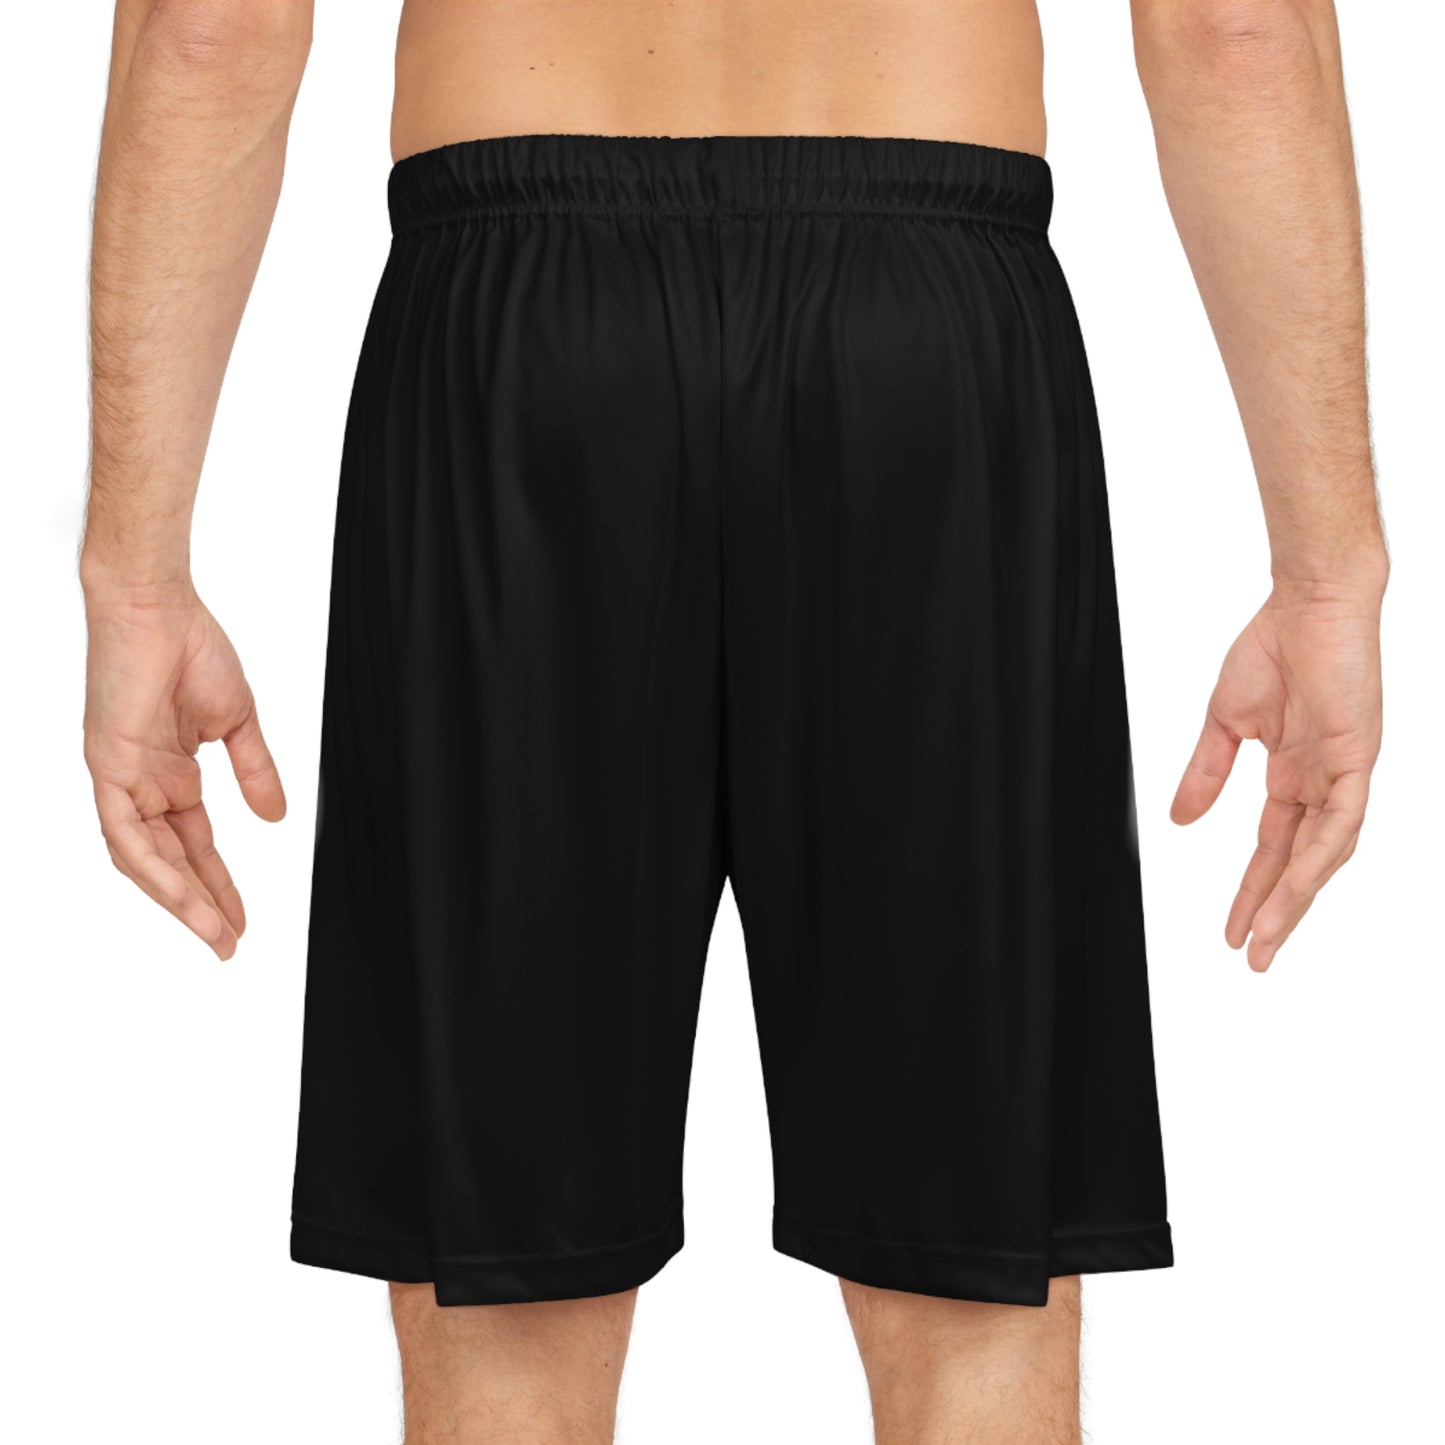 Self Love Basketball shorts (Black)